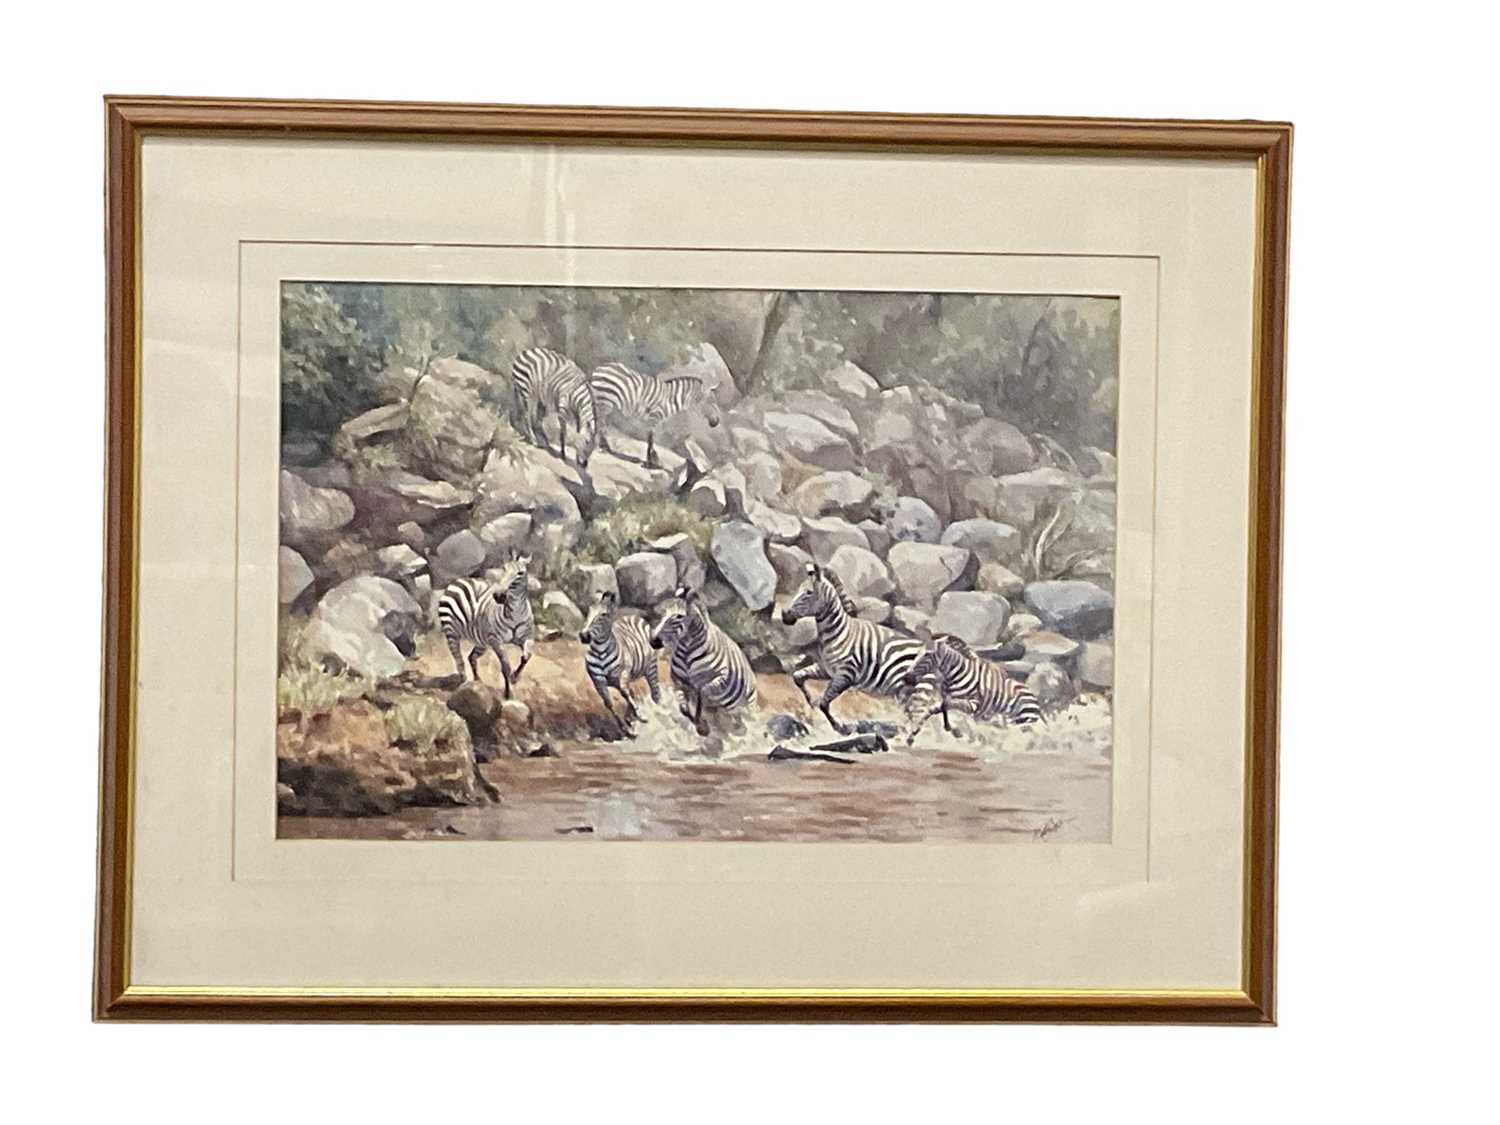 Katy Sogden (contemporary) watercolour - Zebra at a watering hole, 34 x 51cm, glazed frame